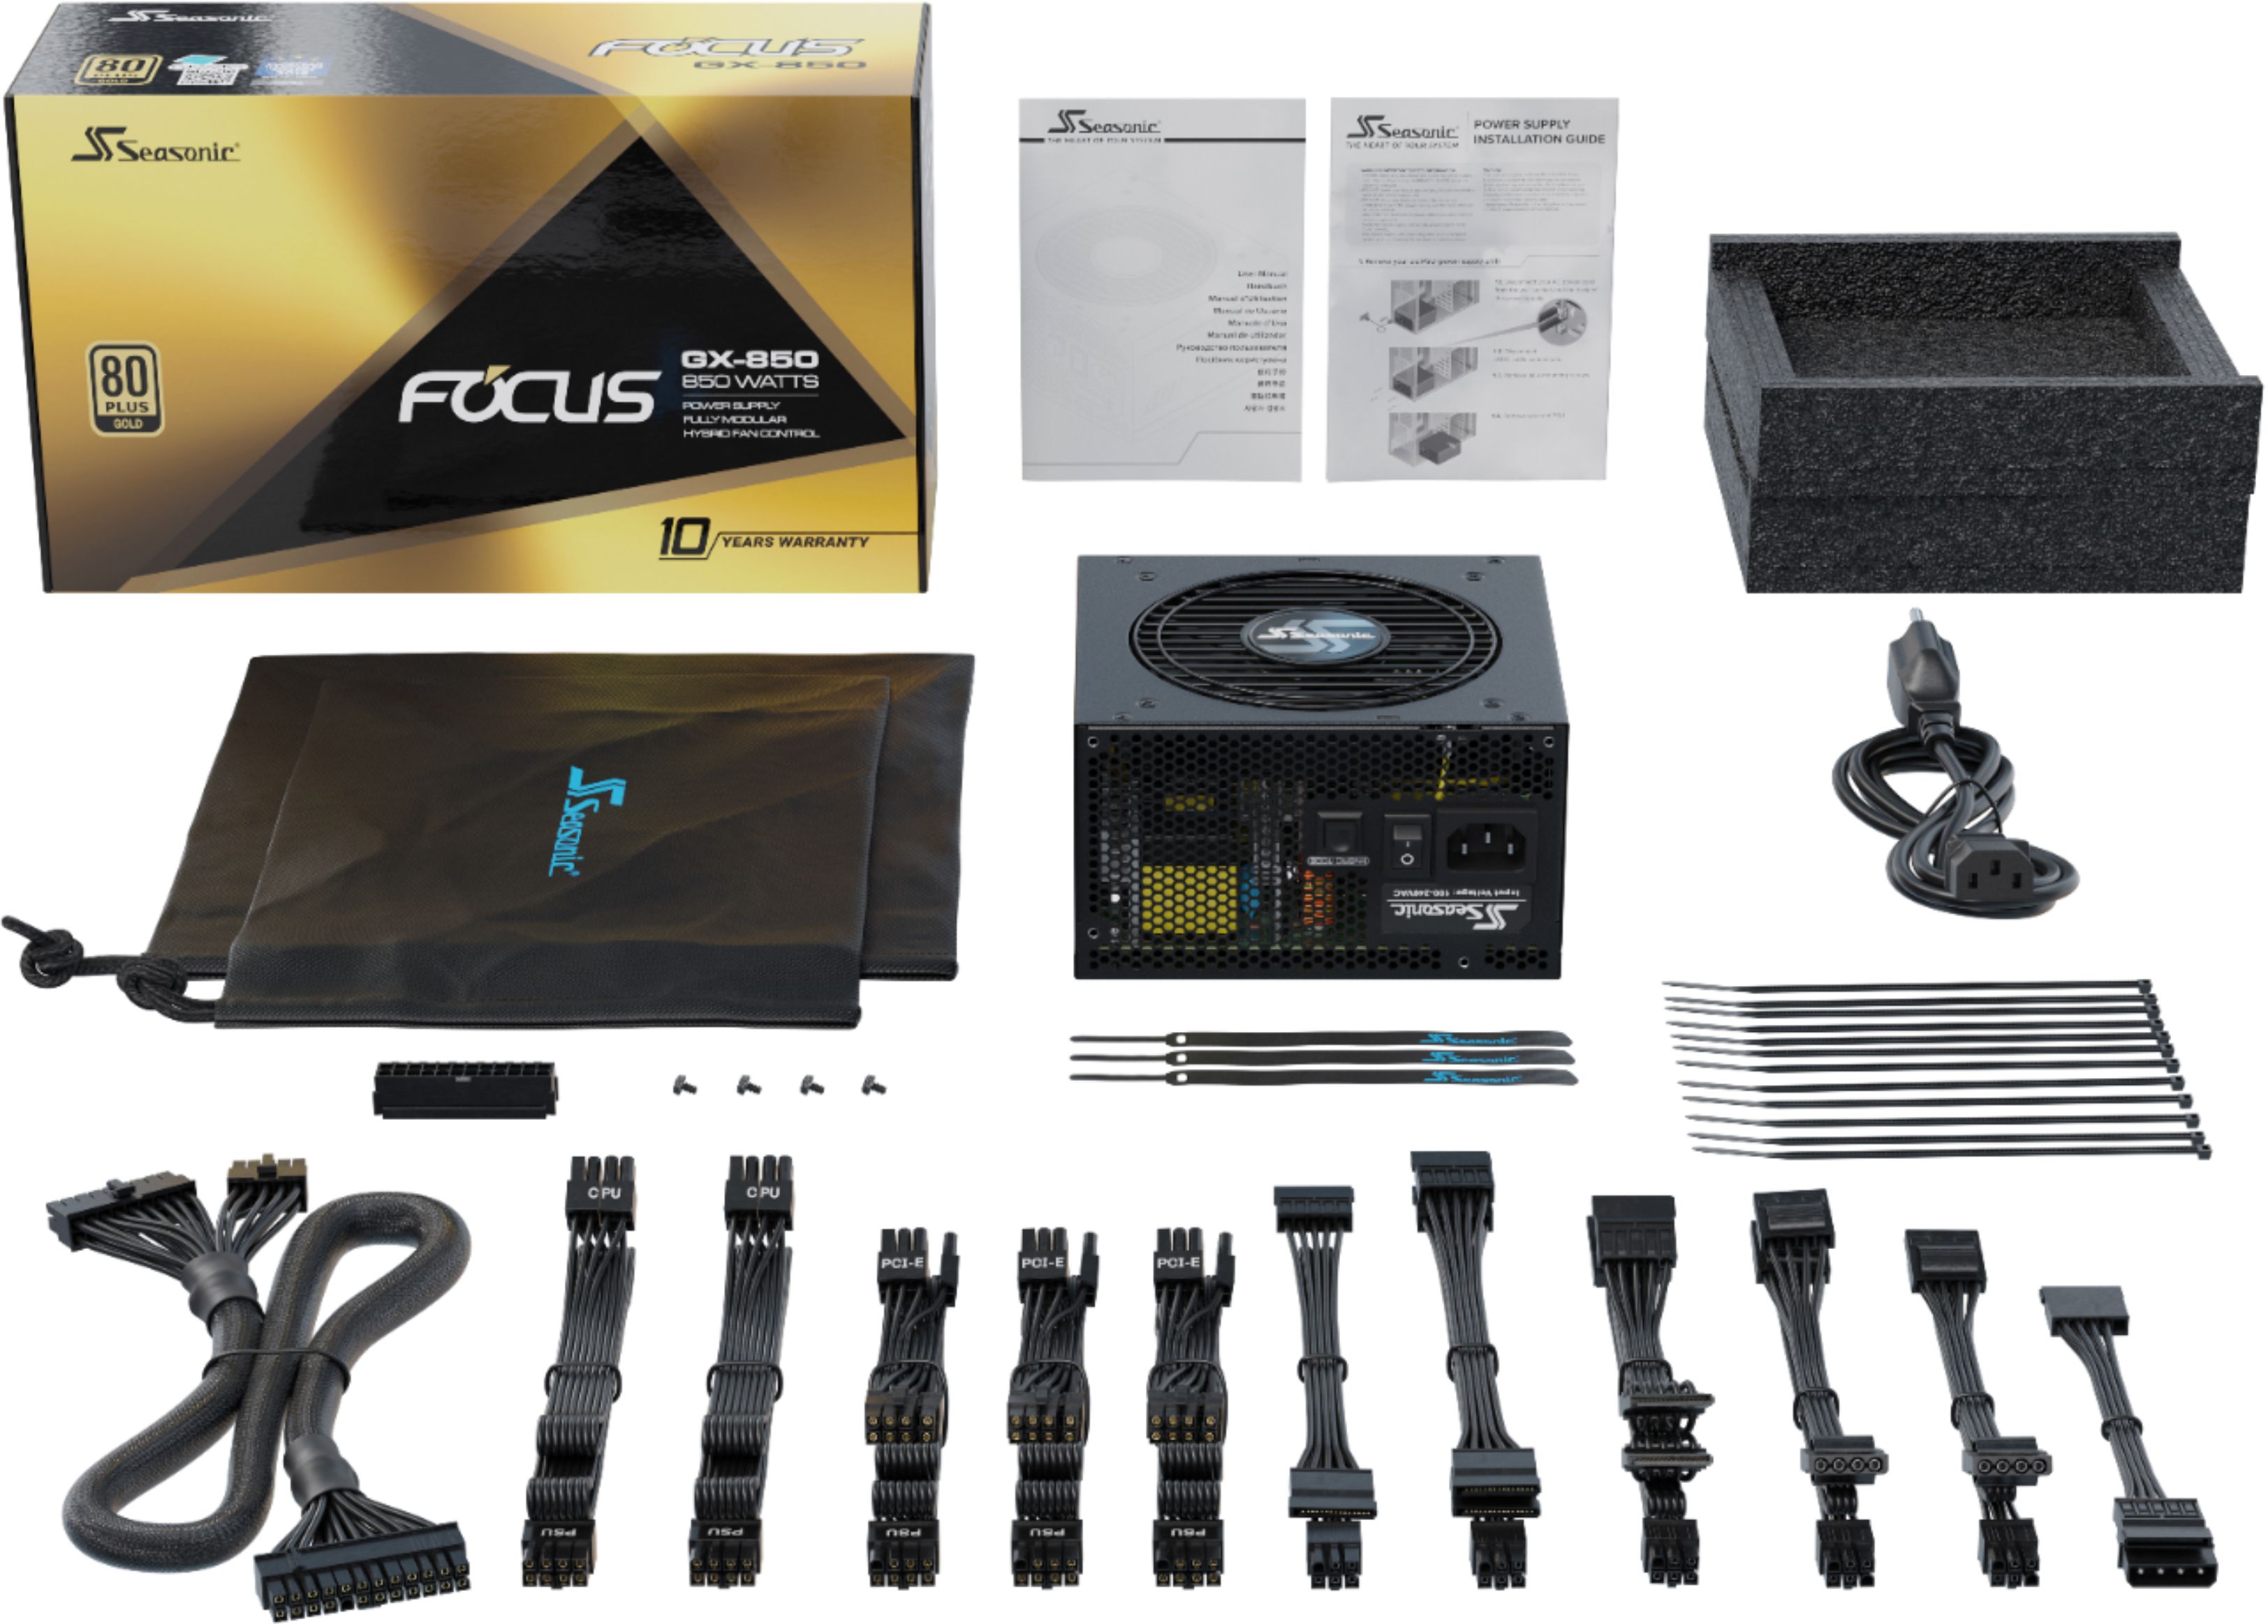 Best Buy: Seasonic FOCUS GM-750, 750W 80+ Gold PSU, Semi-Modular, Fits All  ATX Systems, Fan Control in Silent & Cooling Mode, 7 Yr Warranty Black  FOCUS GM-750